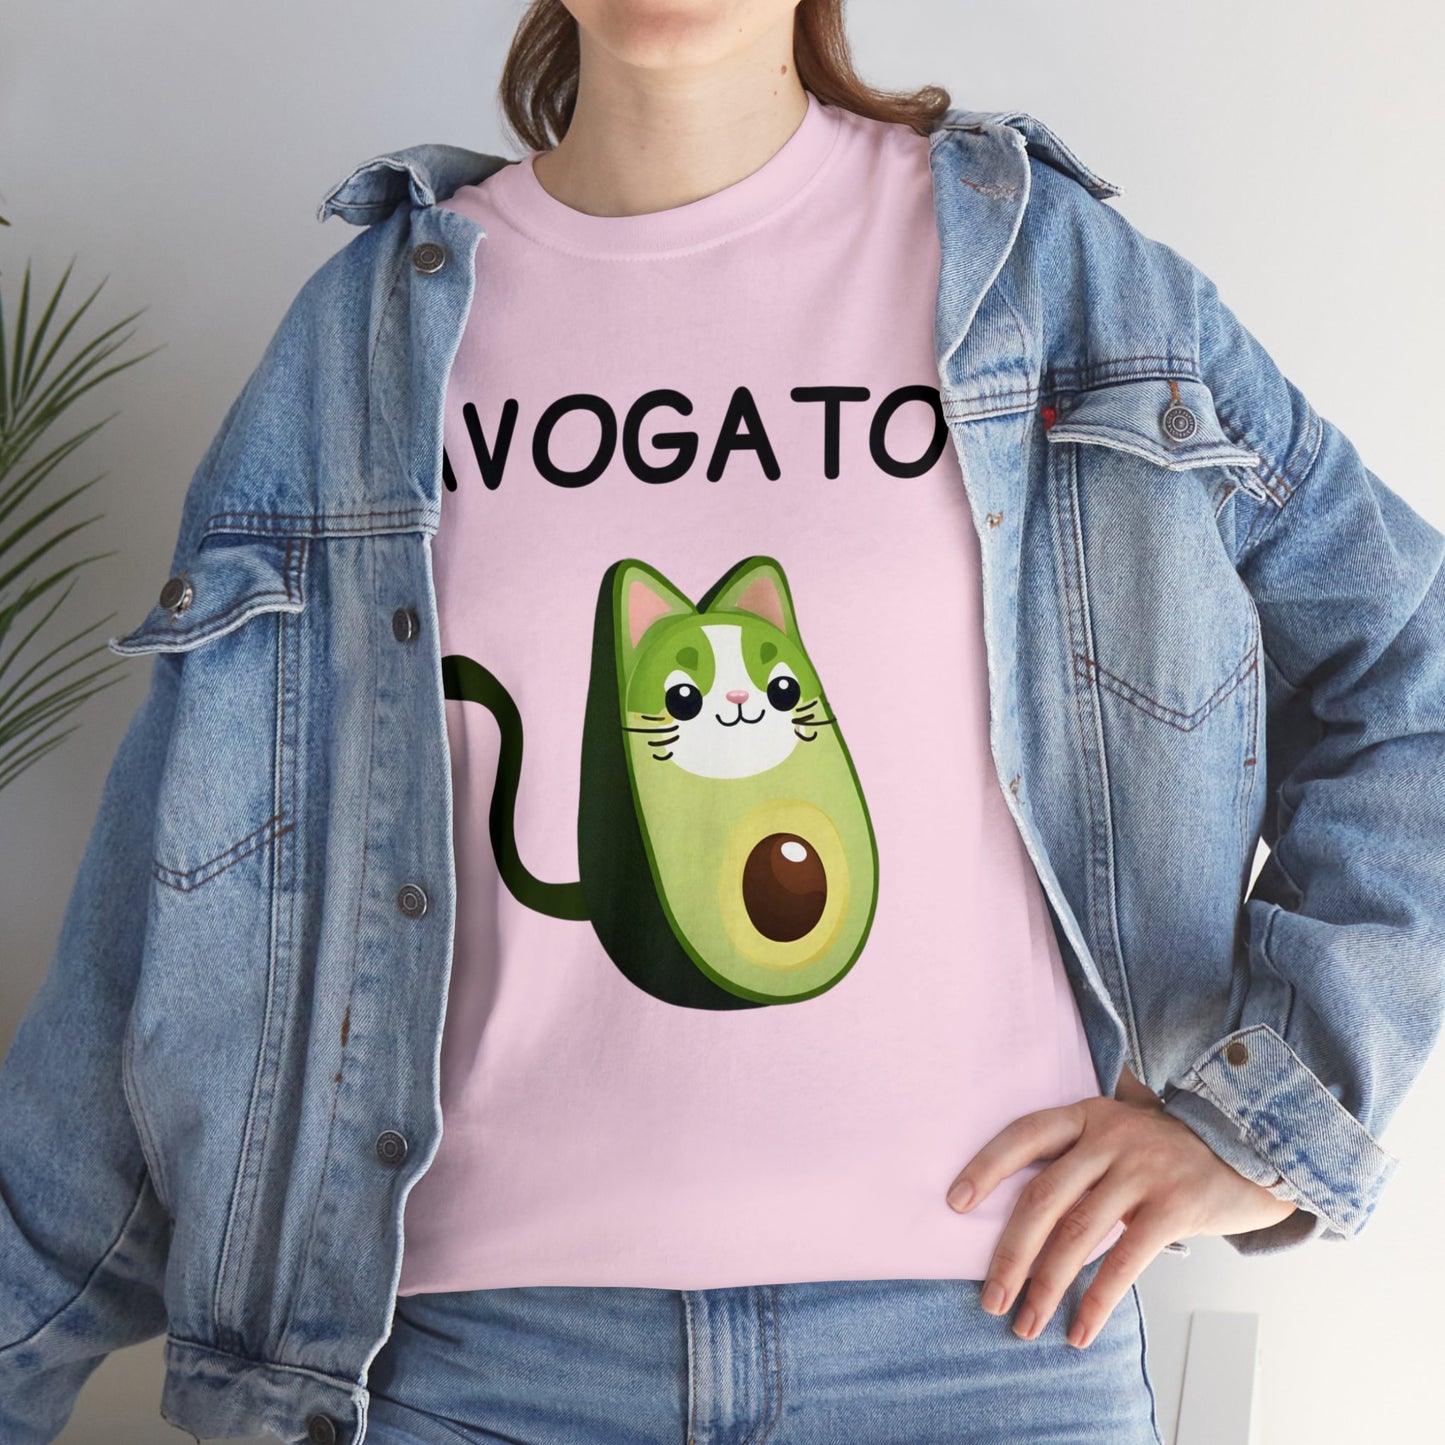 Avogato Funny T shirt Cute Avocado Cat Face Tee Novelty Humor Men Women Graphic Tee Kawaii Friends